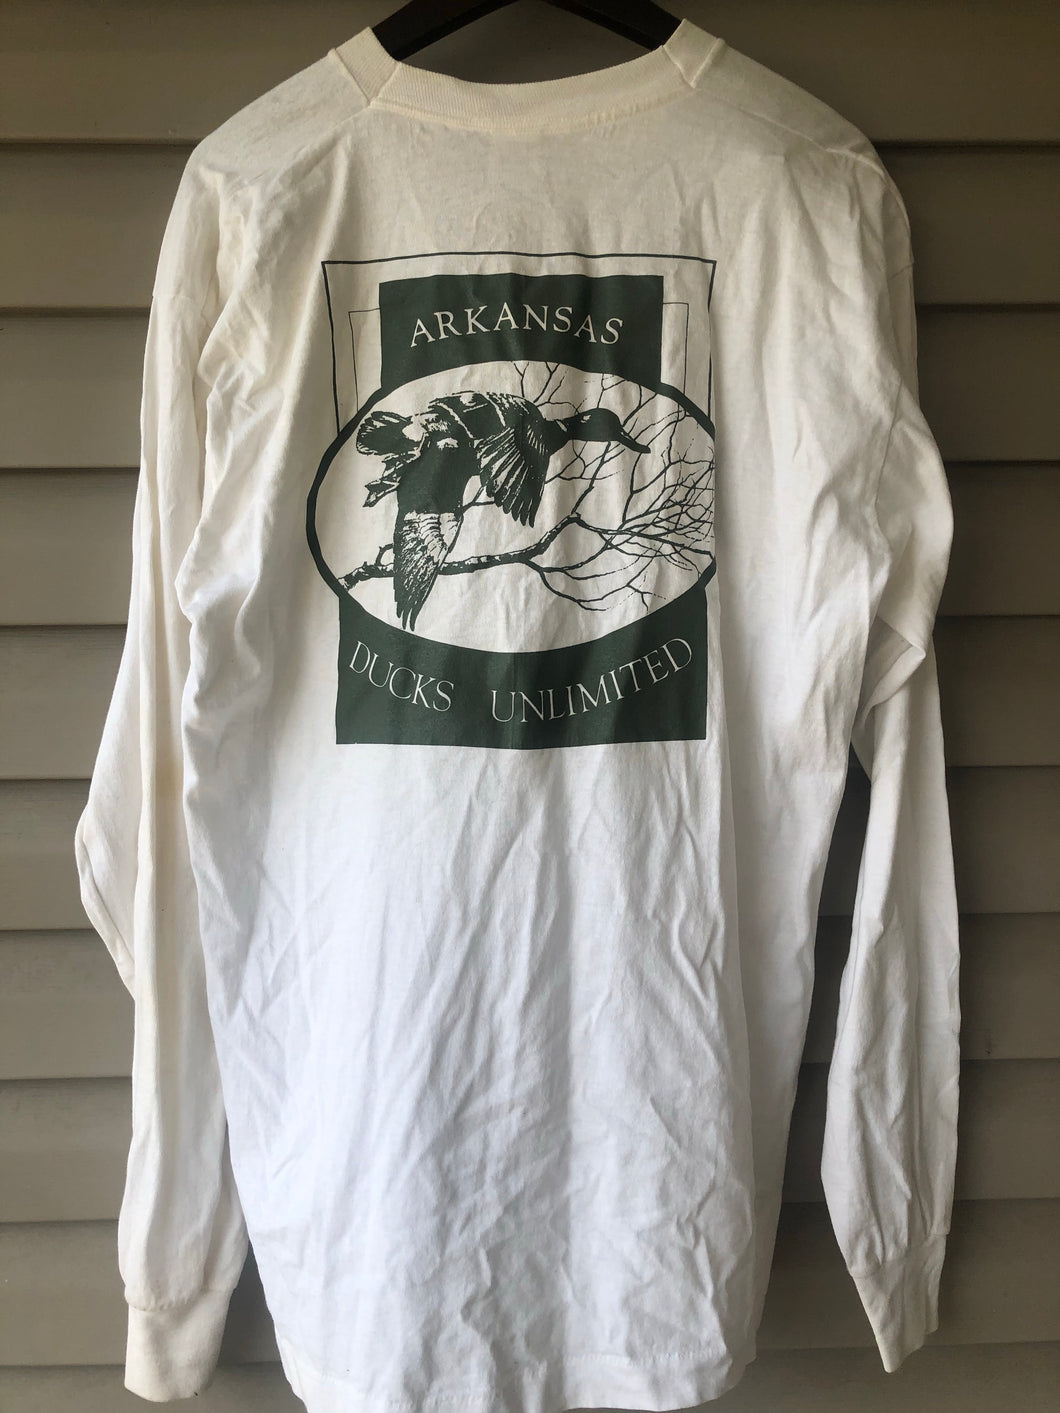 Arkansas Ducks Unlimited Shirt (XL)